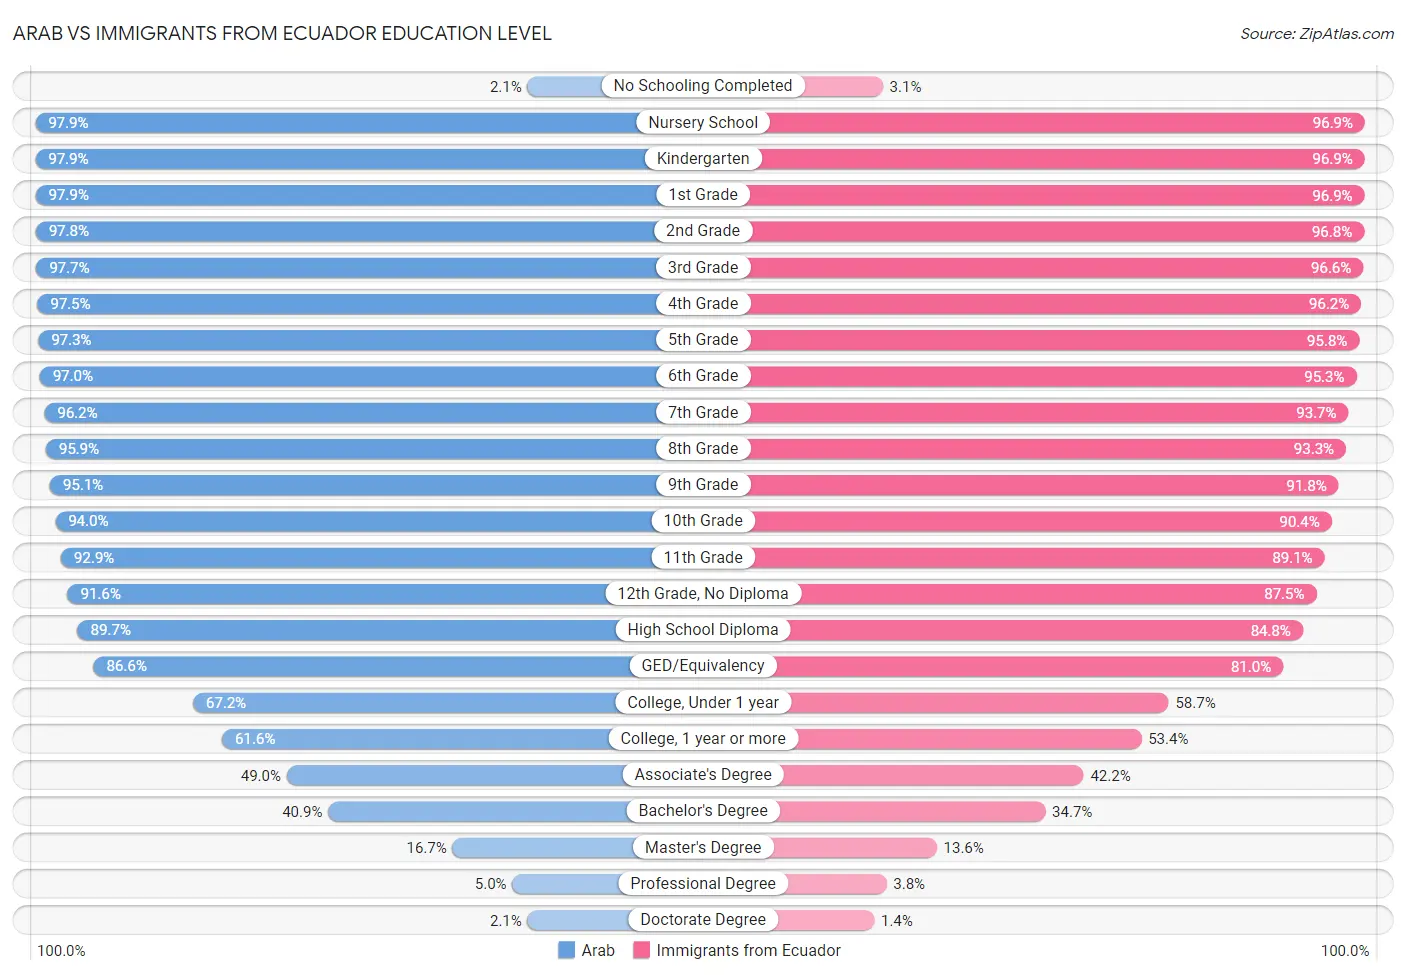 Arab vs Immigrants from Ecuador Education Level